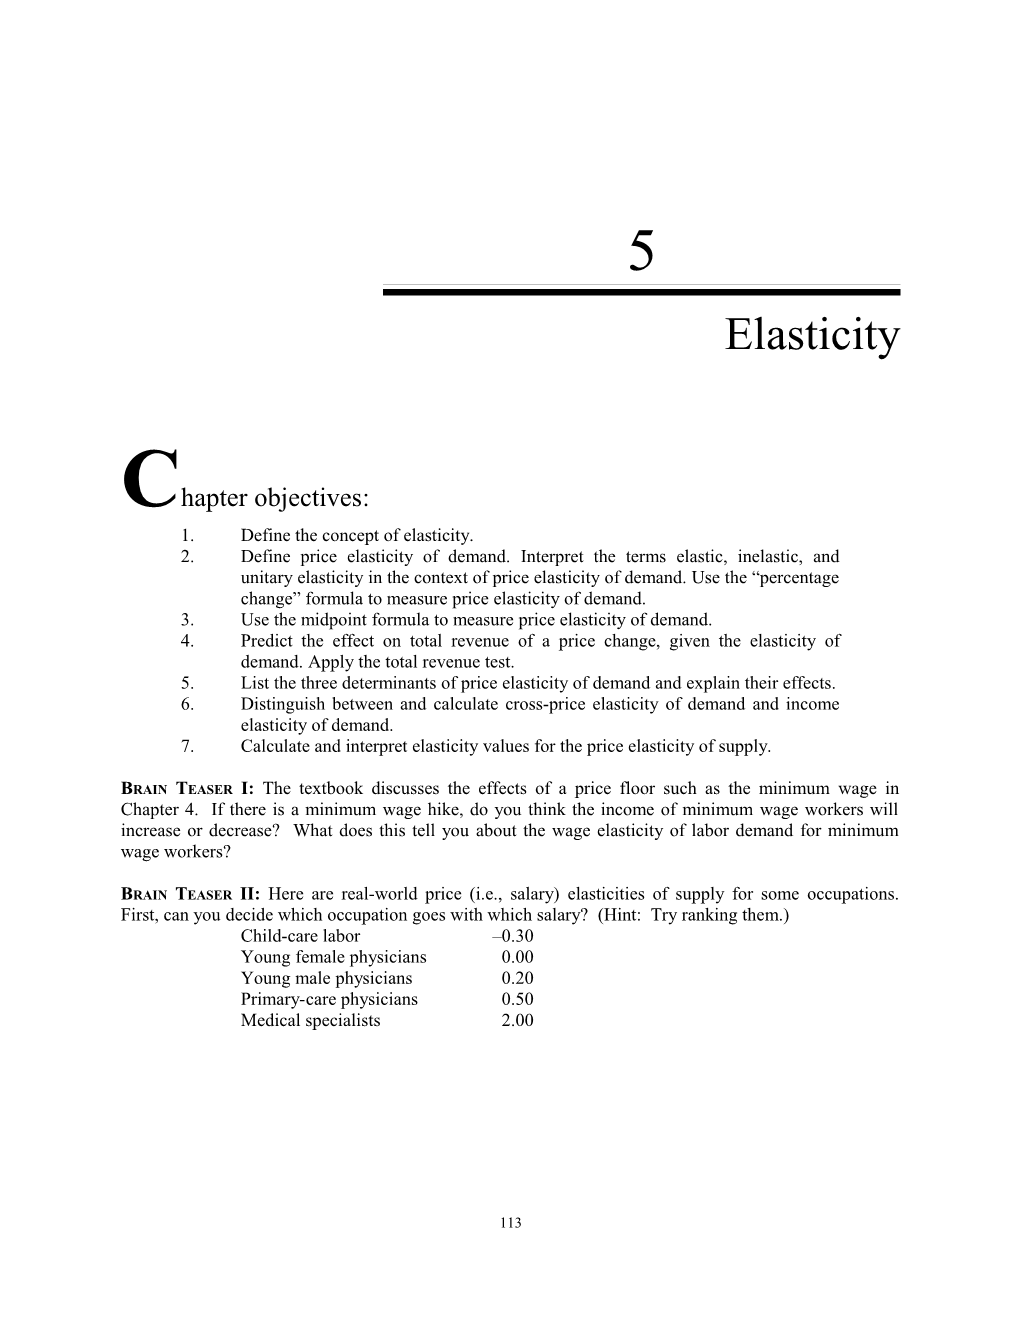 1. Define the Concept of Elasticity